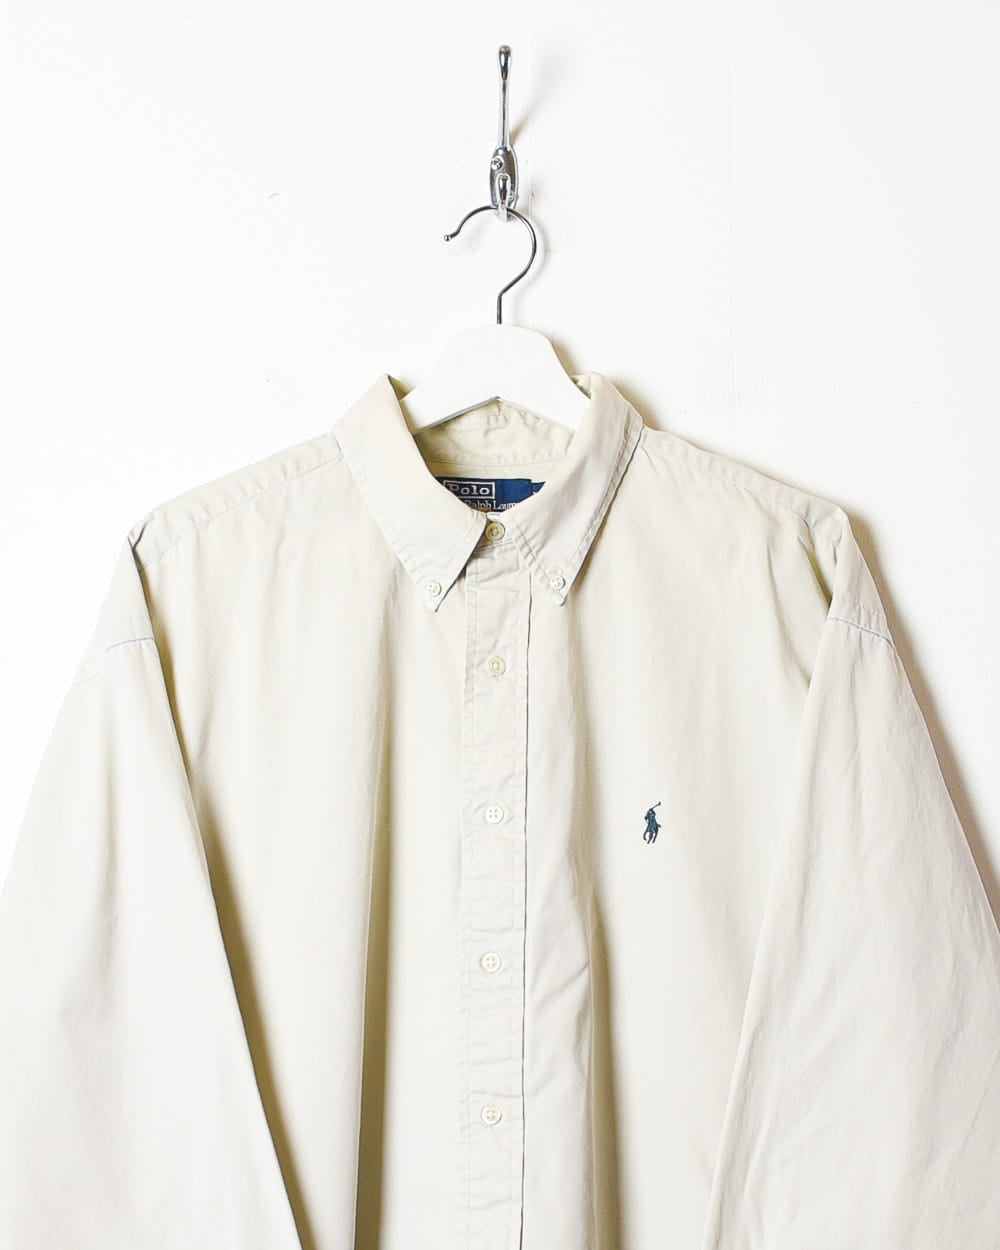 Stone Polo Ralph Lauren Shirt - X-Large